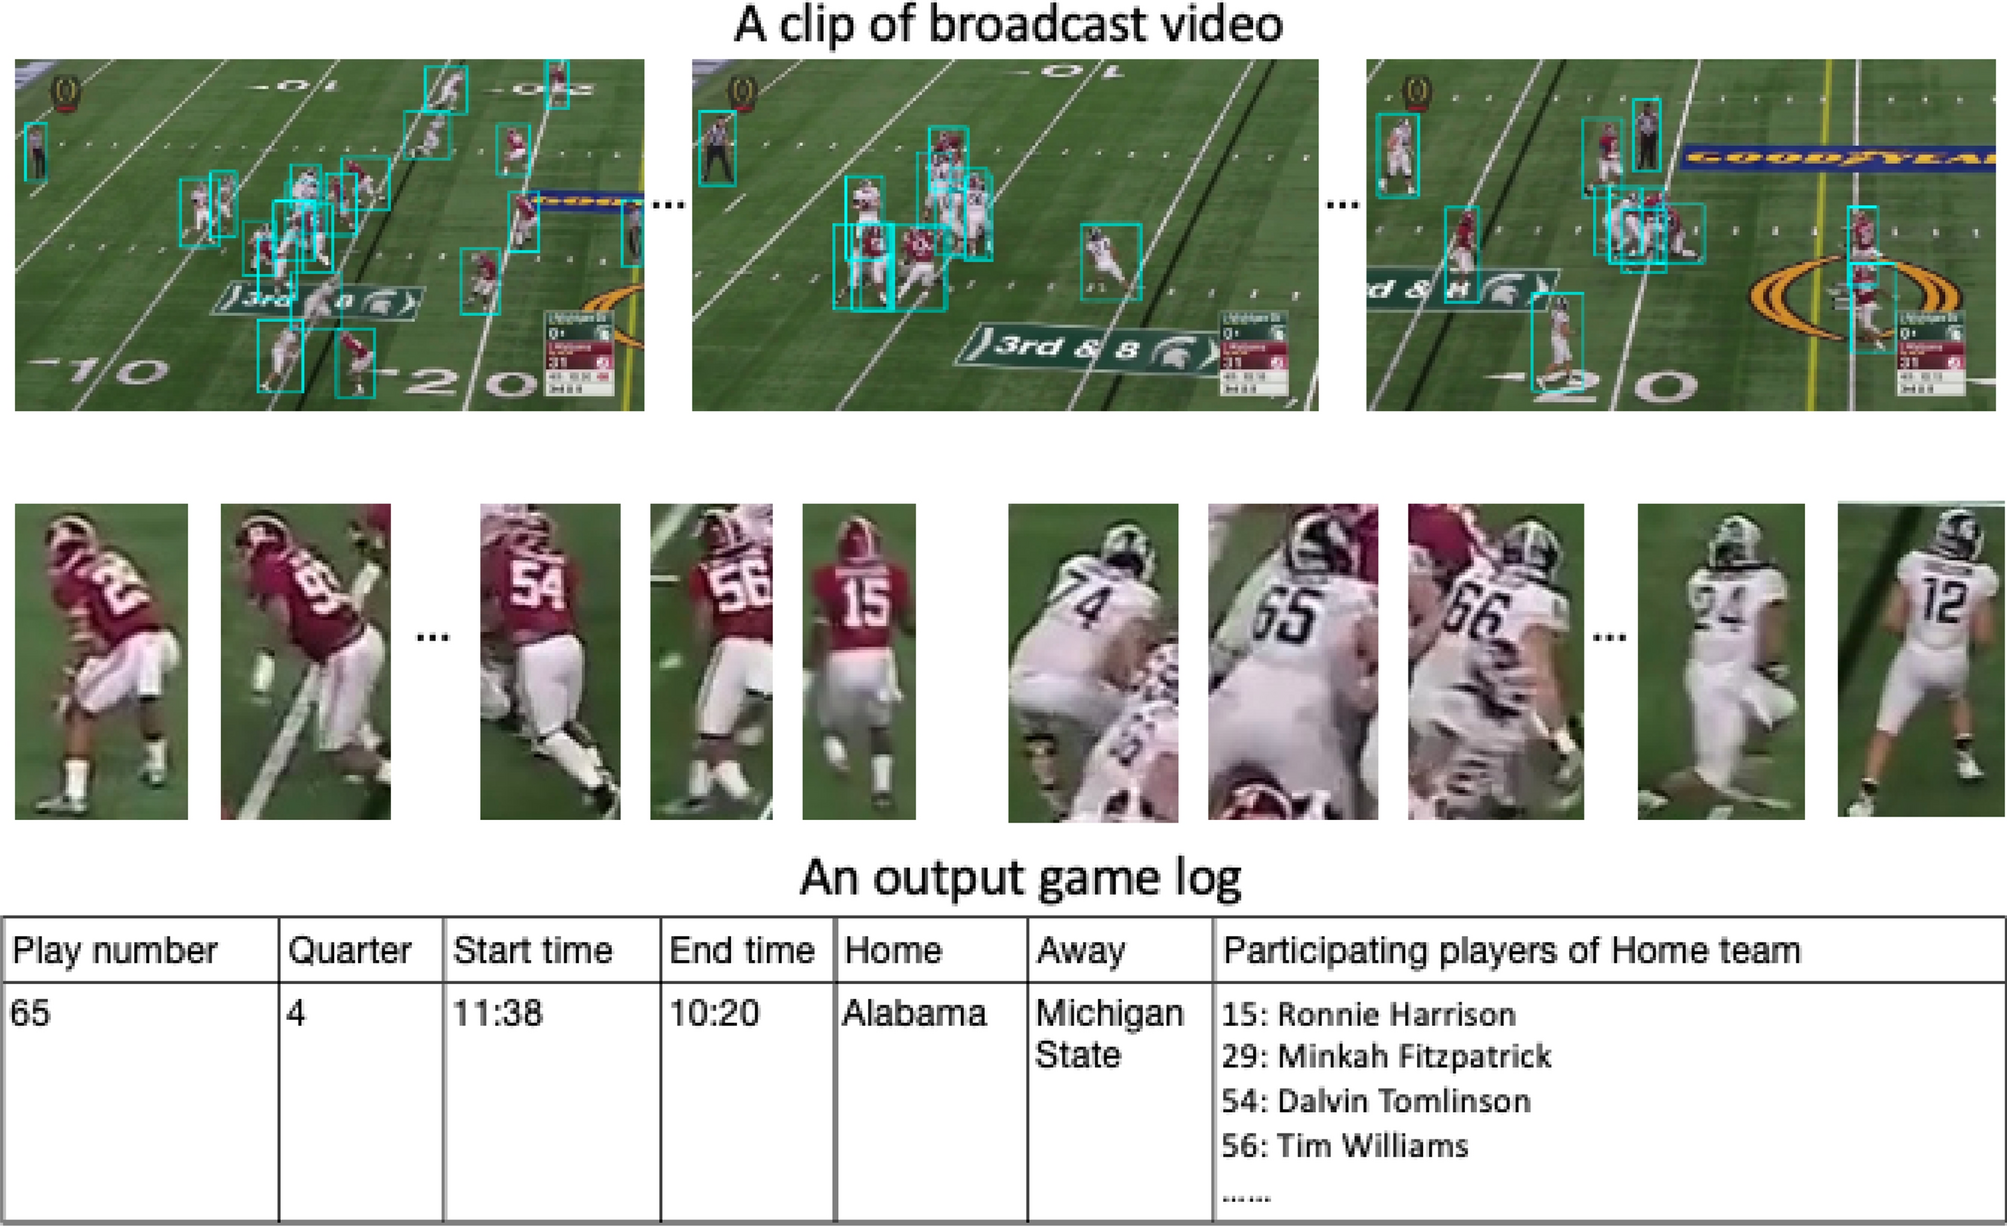 PDF] Football Match Statistics Prediction using Artificial Neural Networks